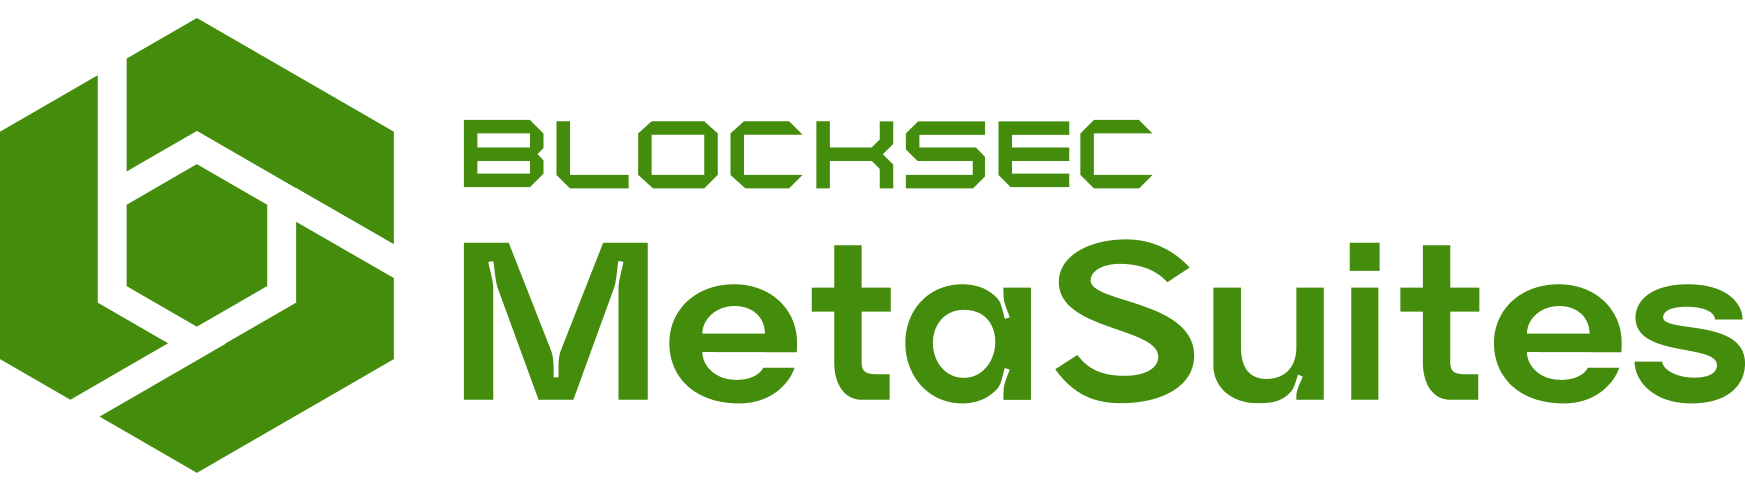 metasuites logo